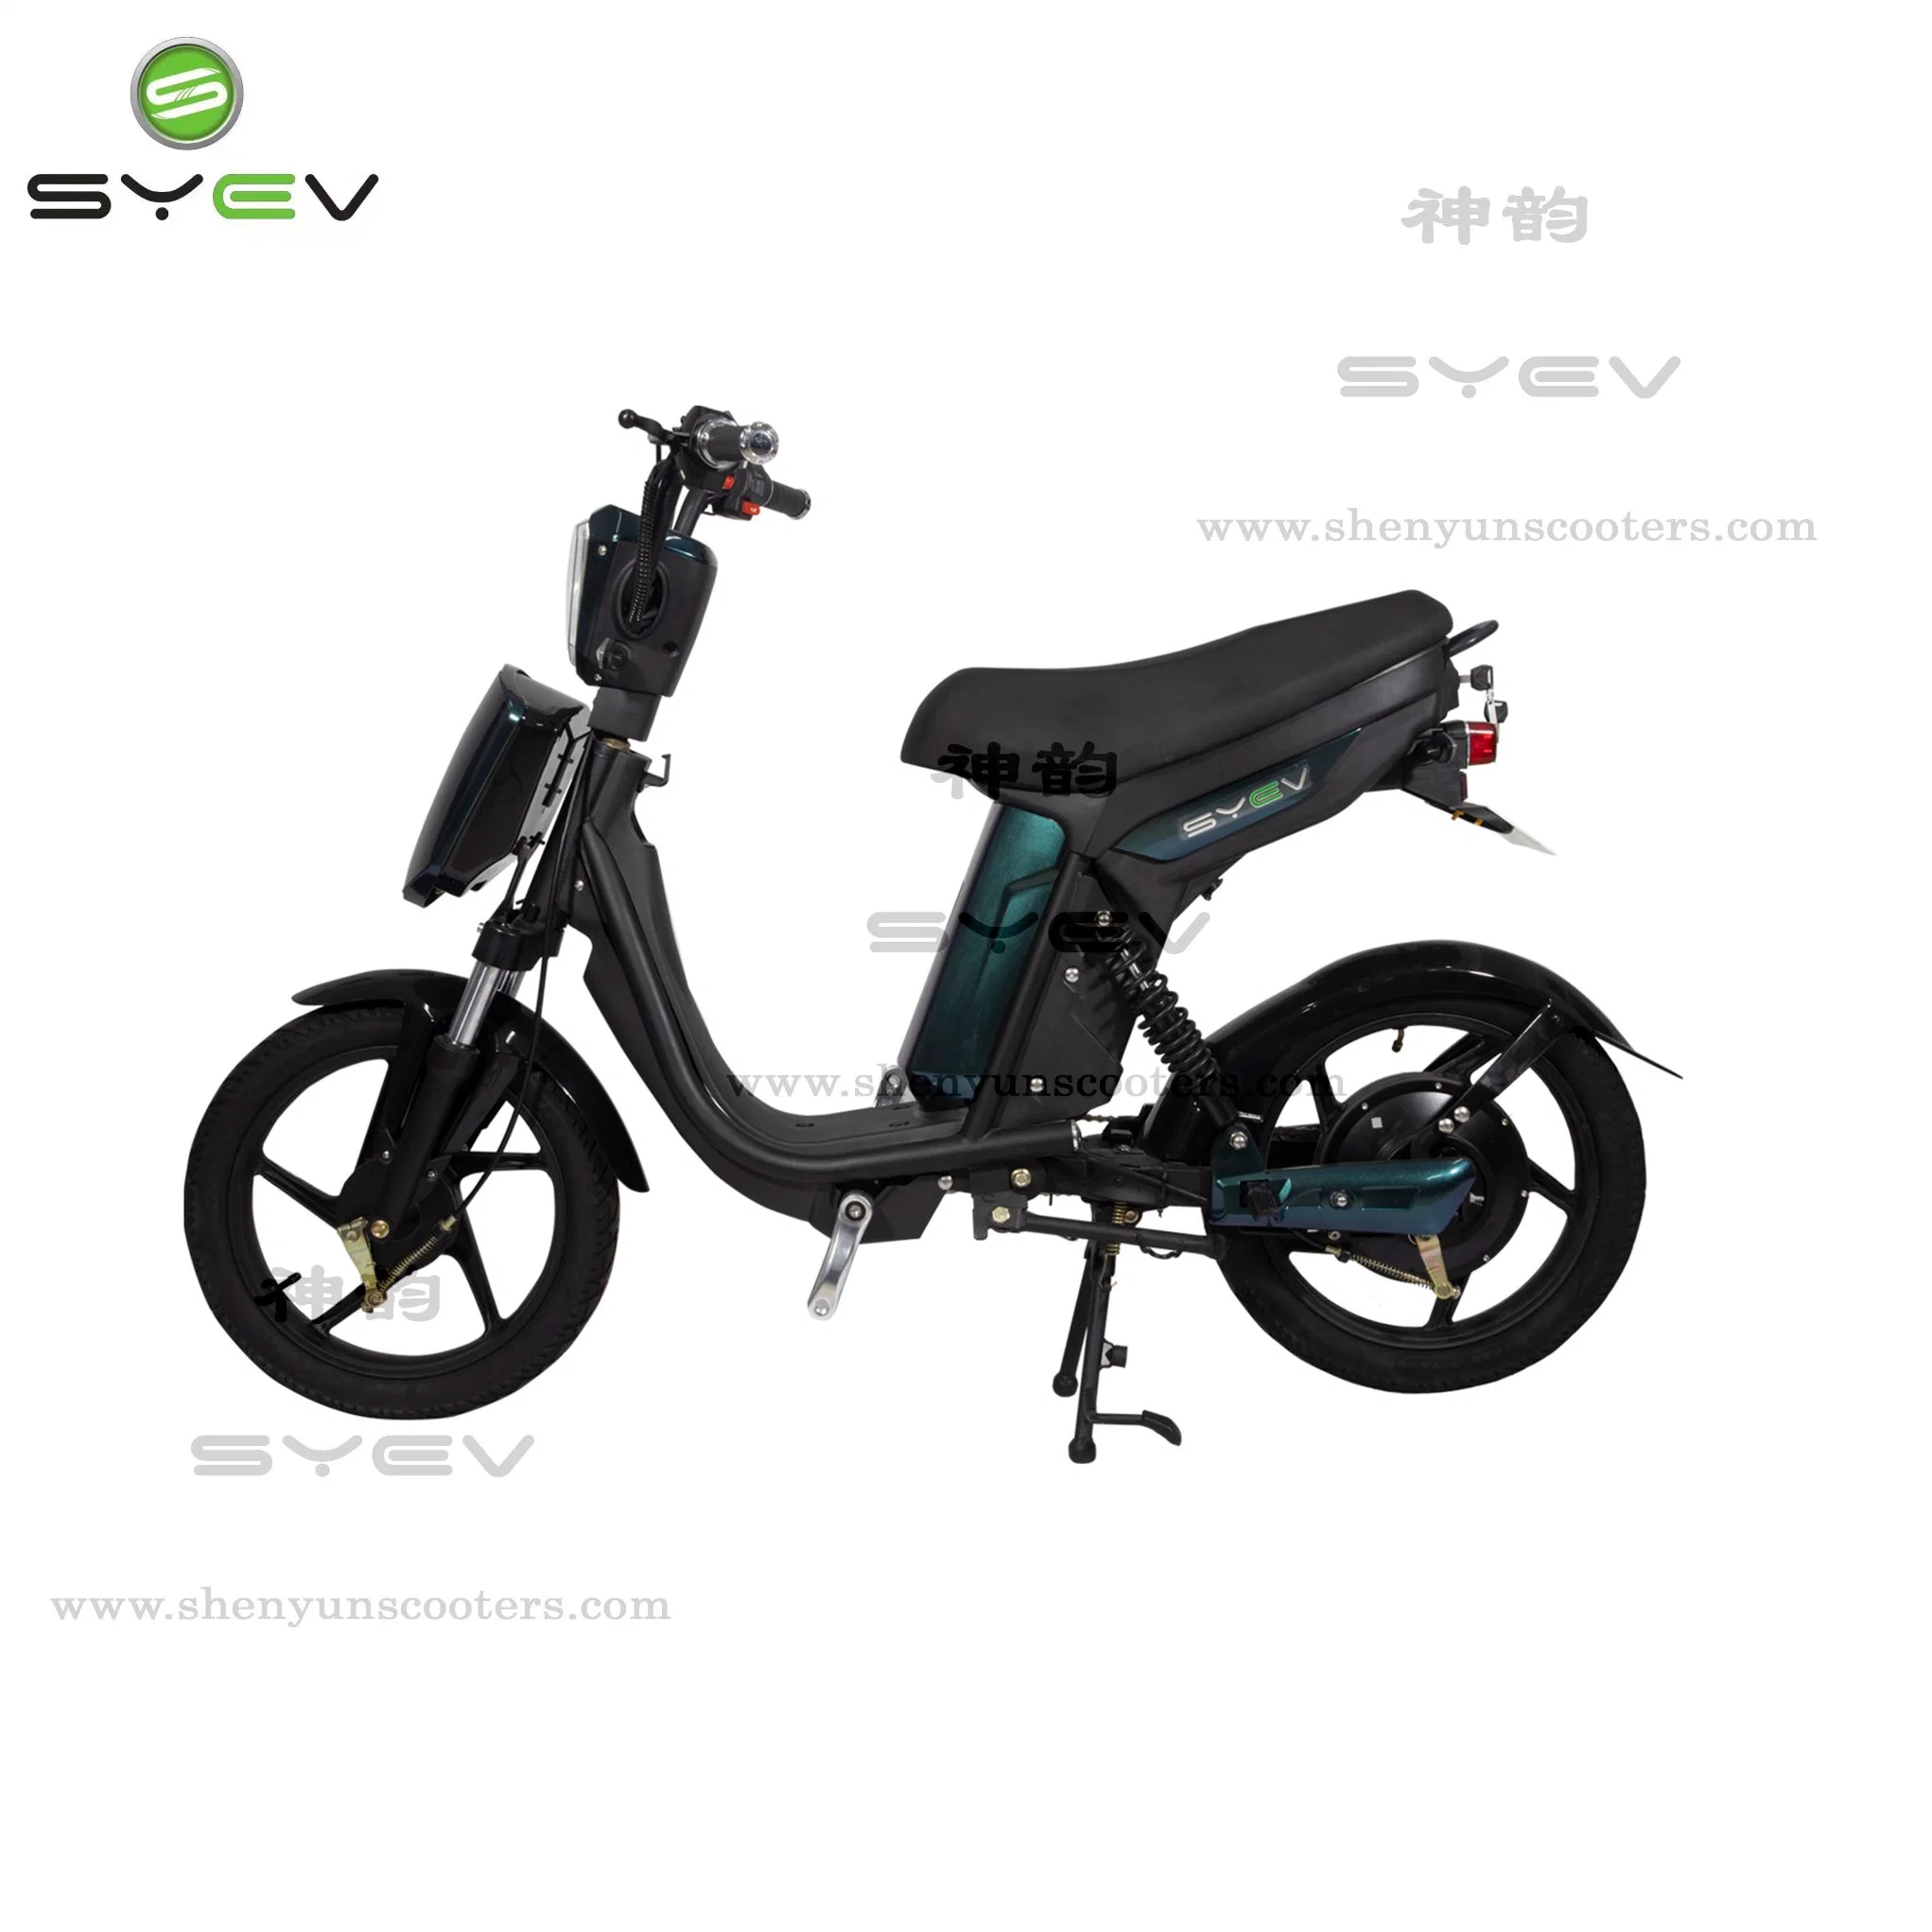 Syev Top Sale High Quality Electric Bike 350W 2 Wheel Cheap Price E-Scooter